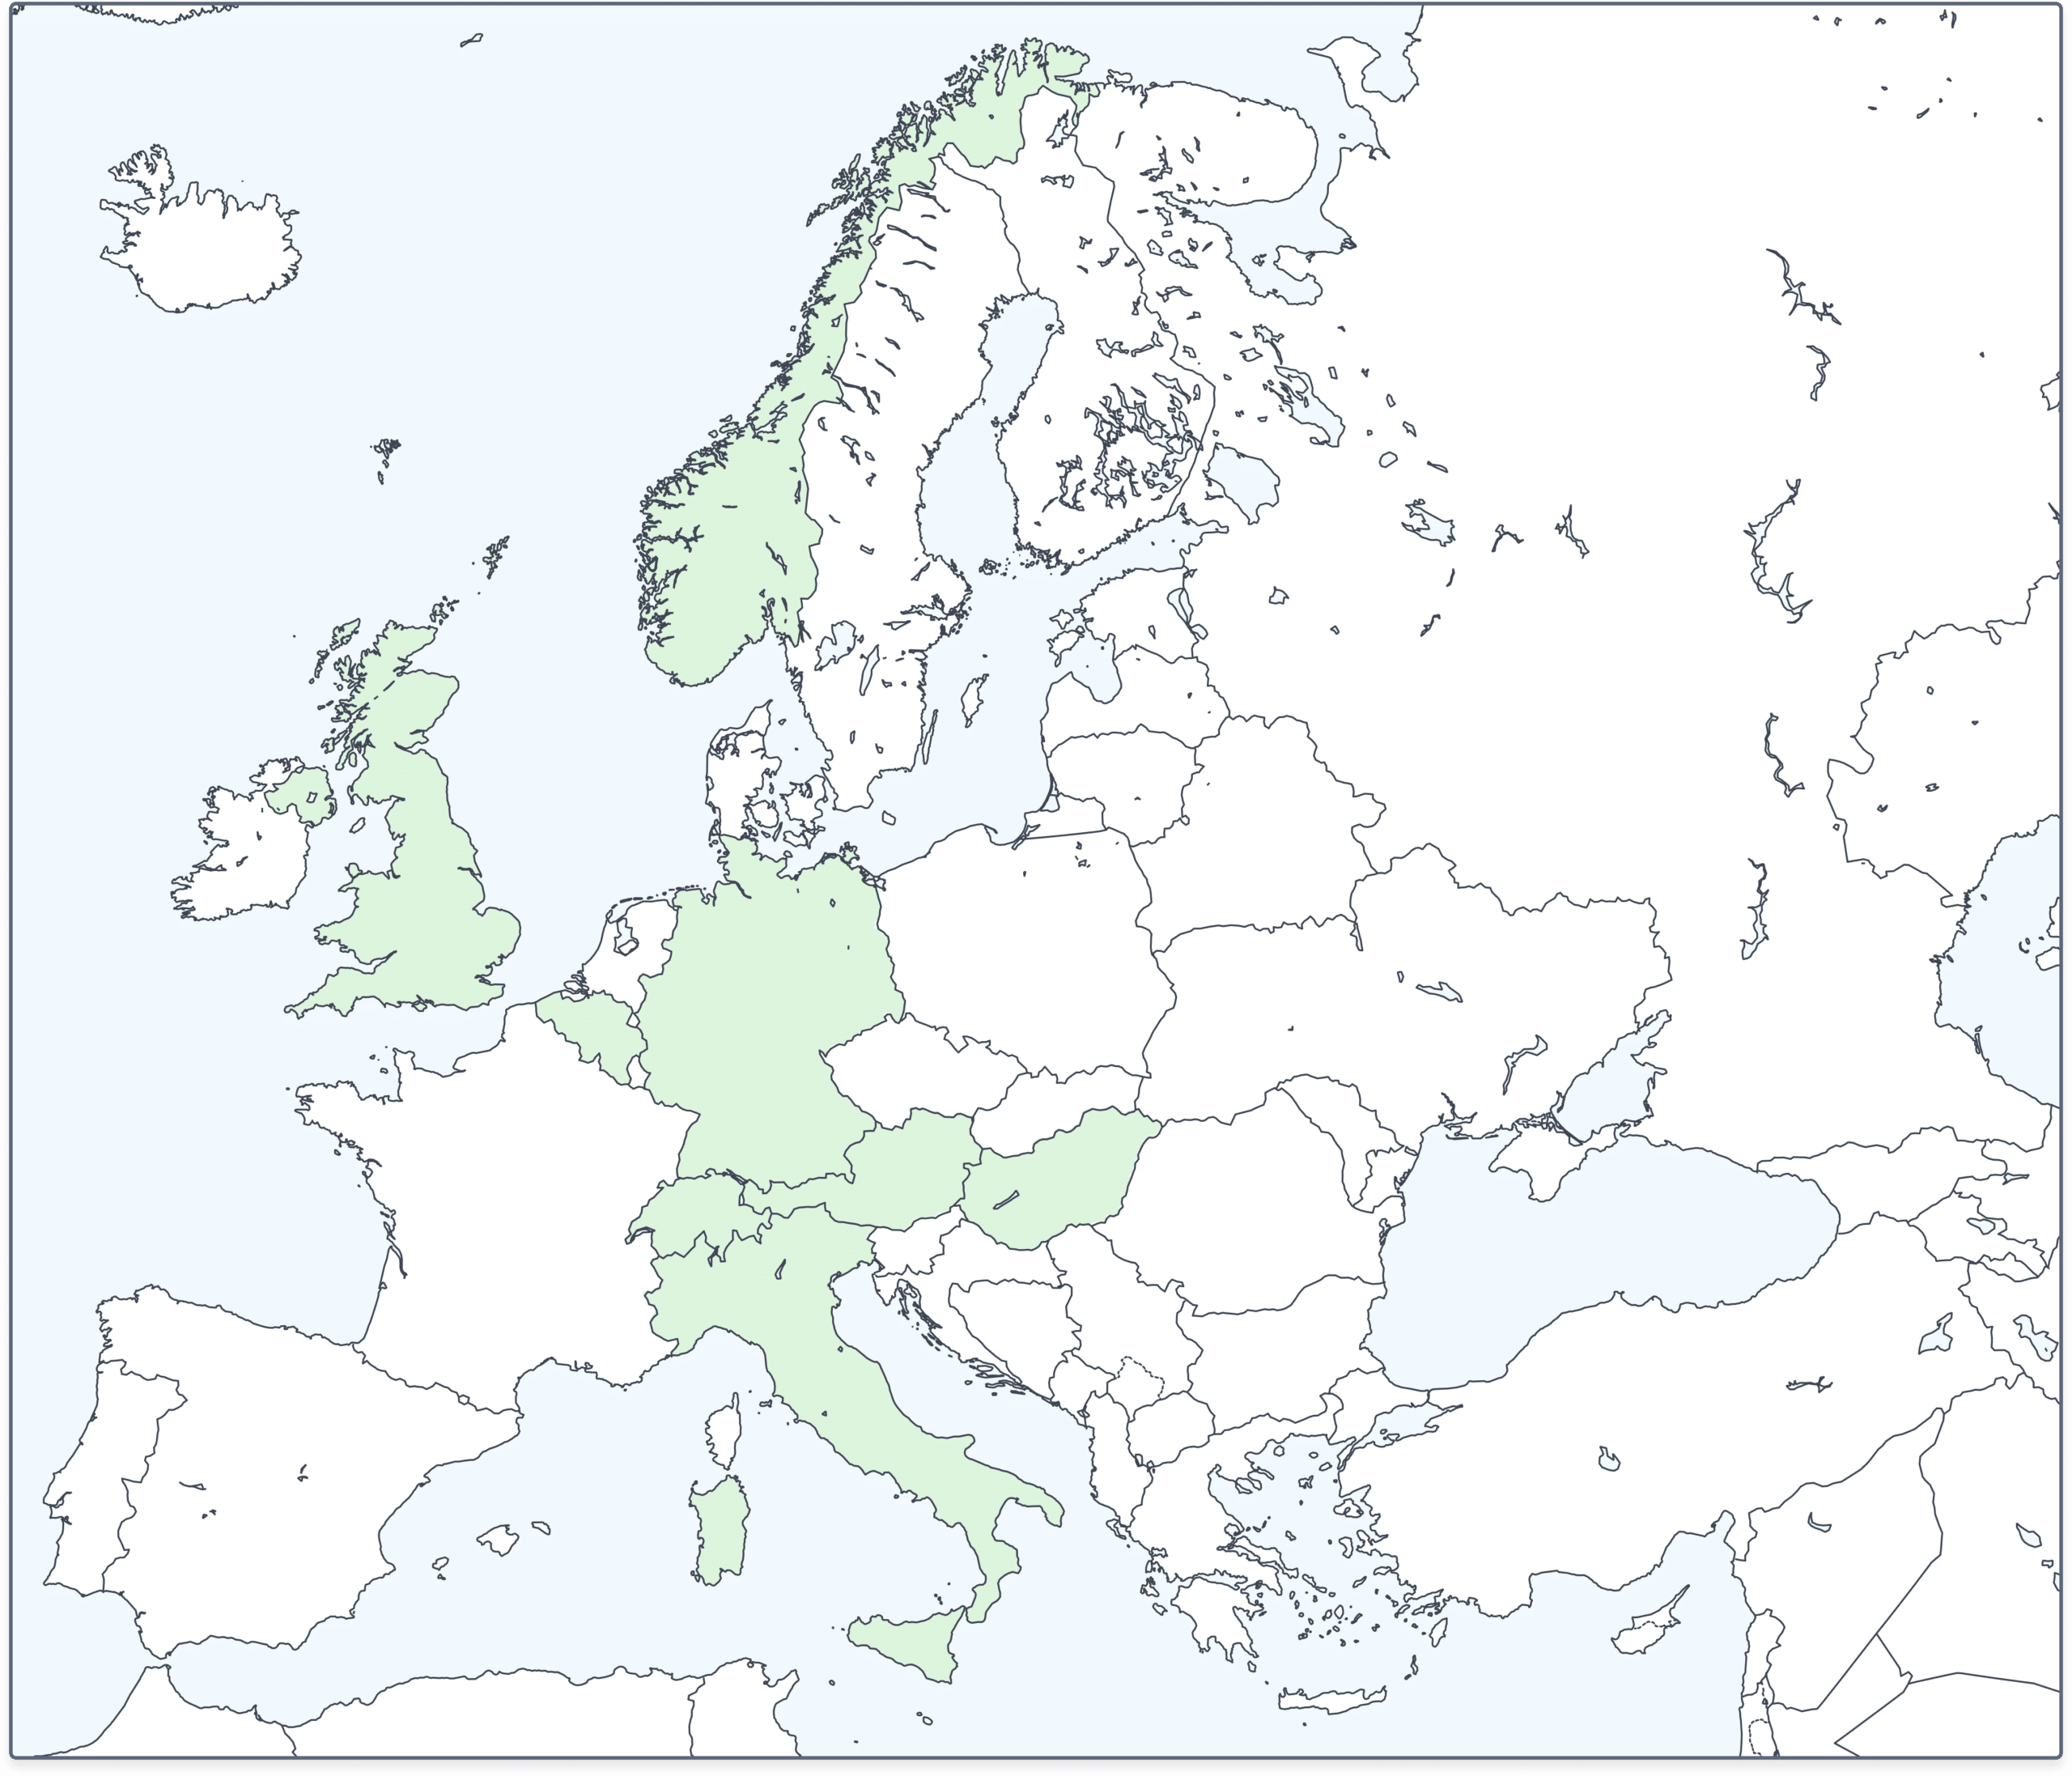 Europe_blank_laea_location_map 1-2